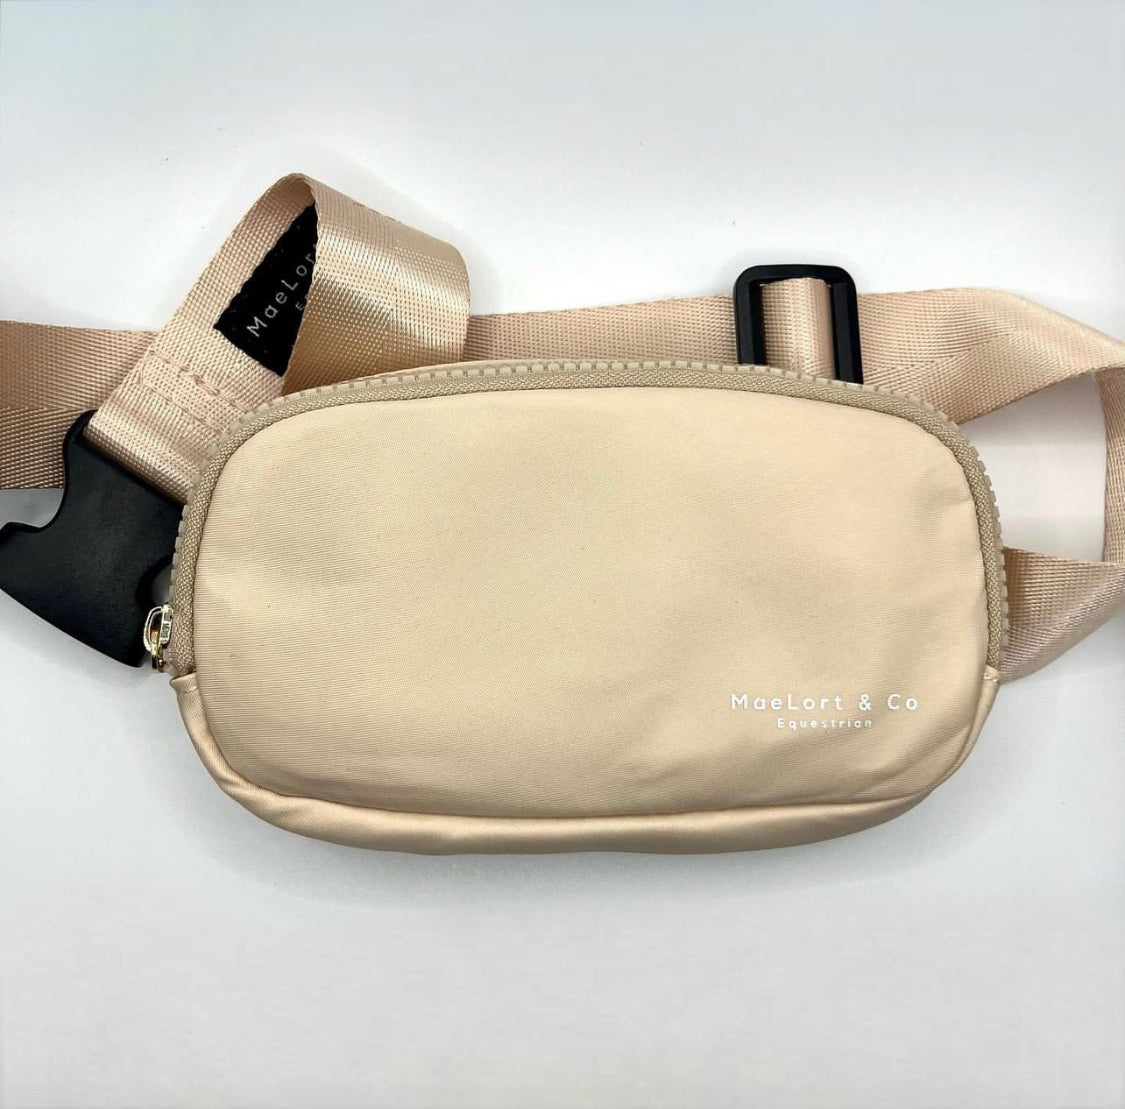 MaeLort Equestrian Belt Bag